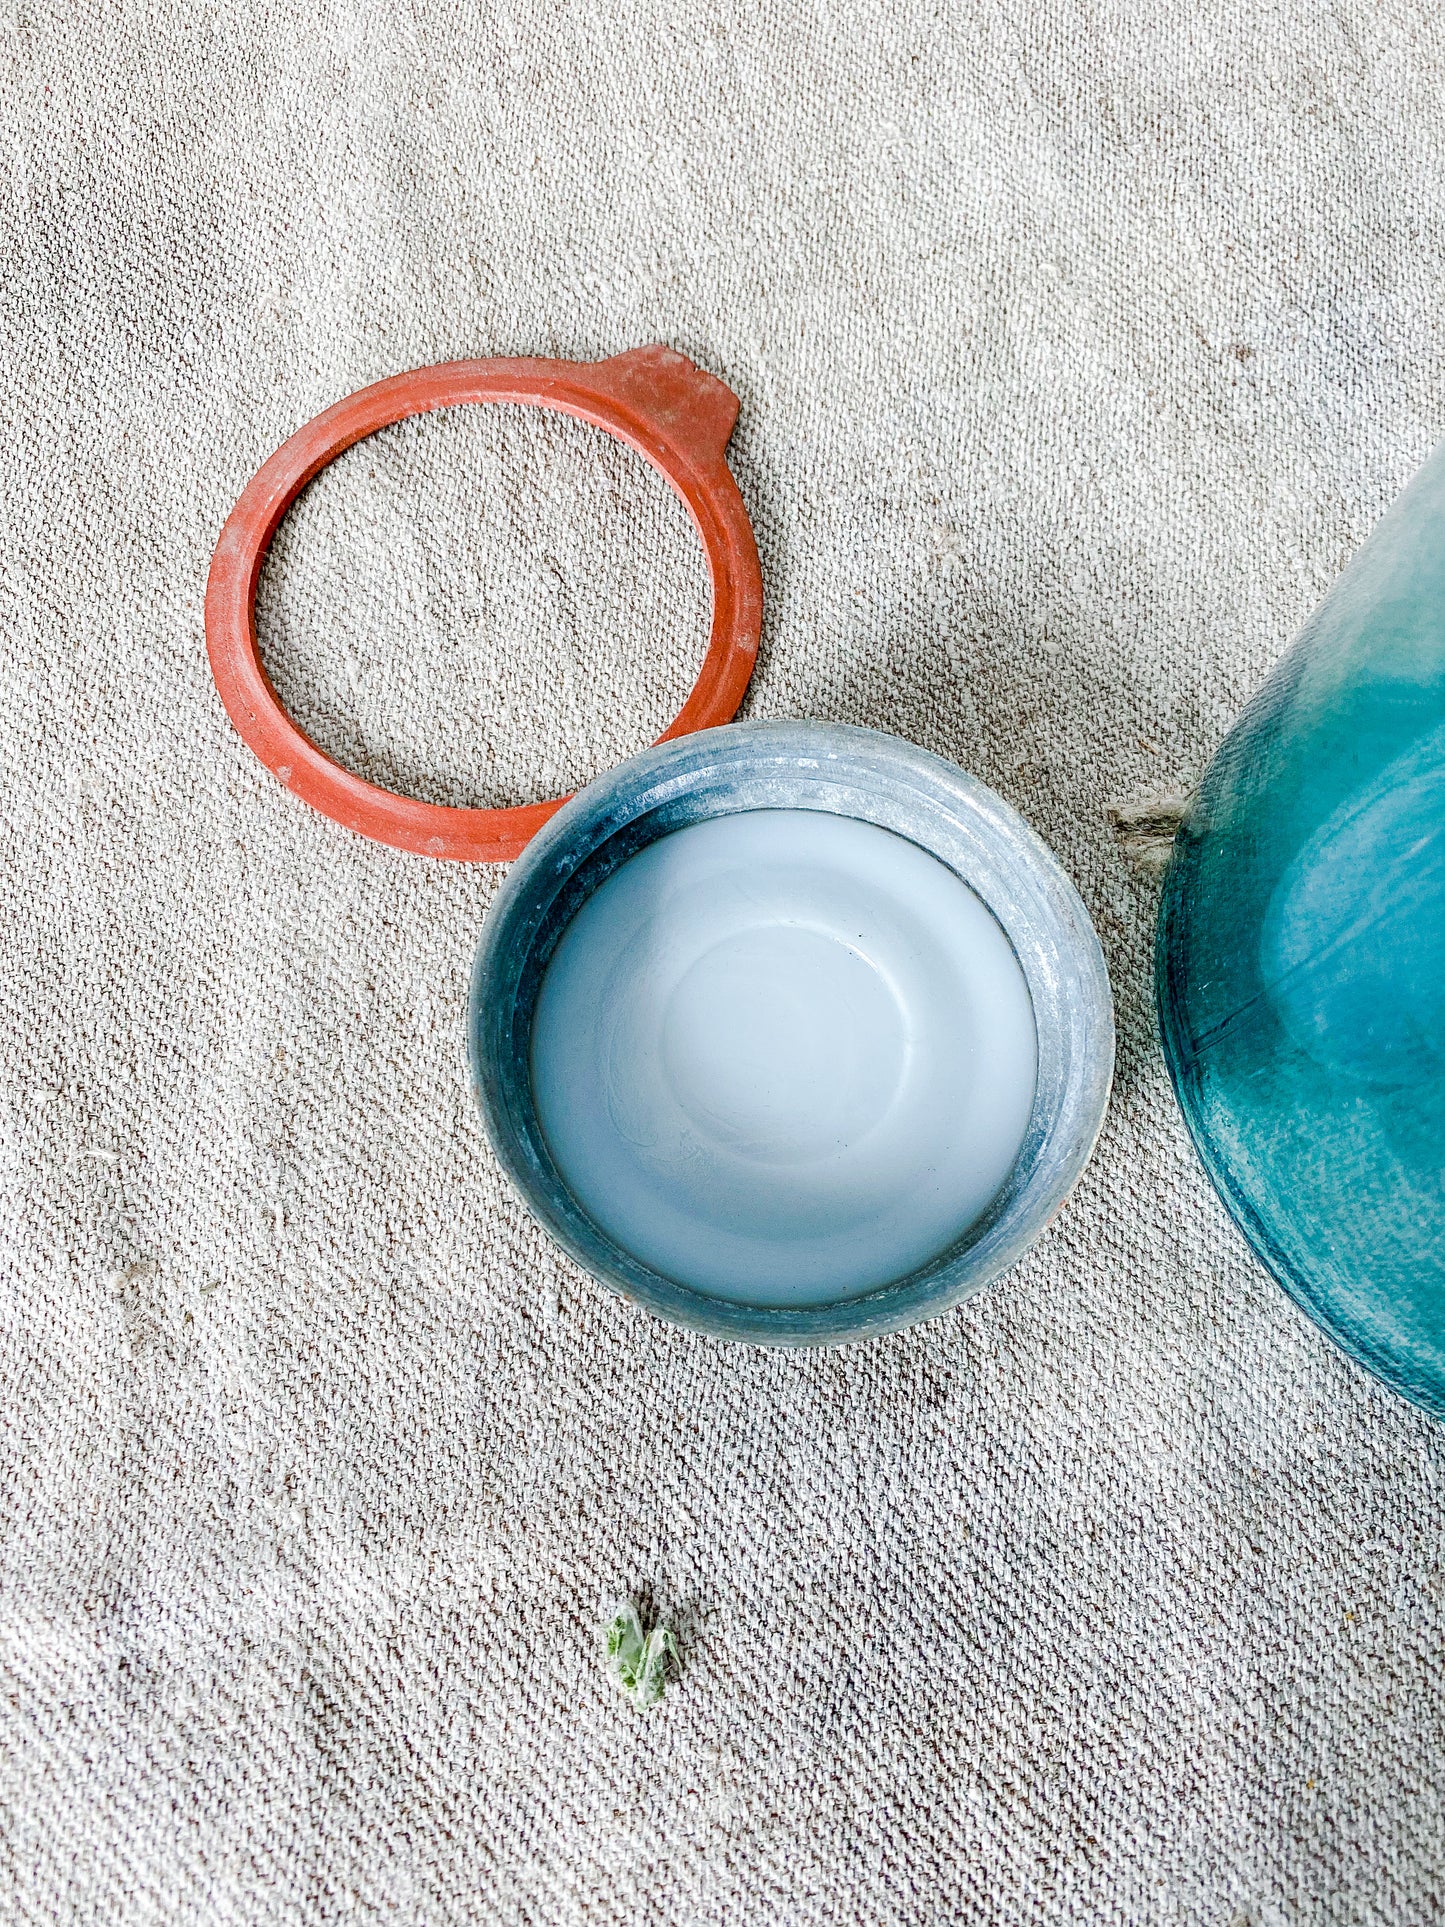 Vintage Aqua Blue Half Gallon Canning Jar with Zinc Lid - Ball Perfect Mason Jar 1923-1933